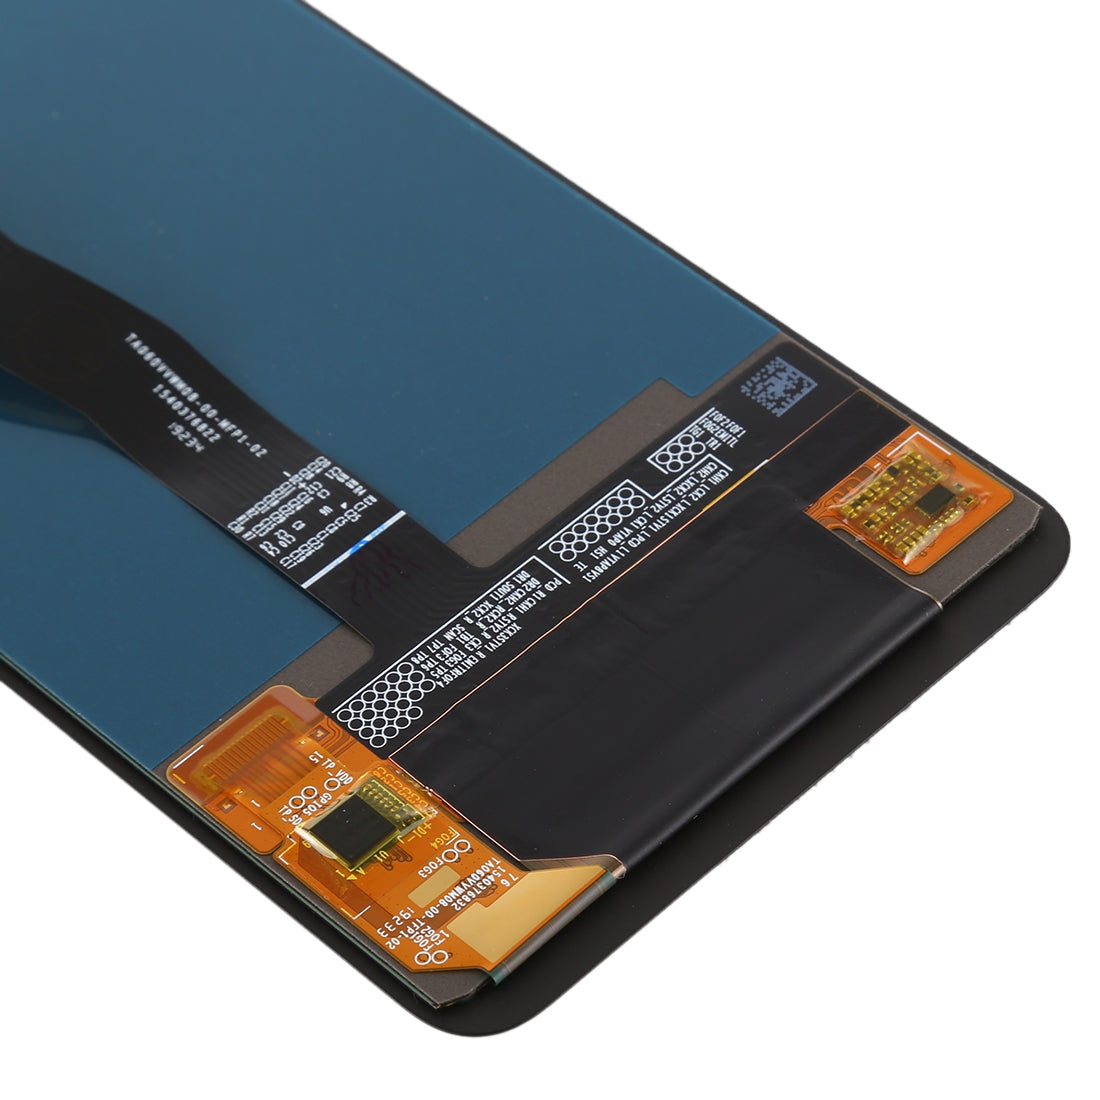 Ecran LCD + Vitre Tactile HTC U19e Noir